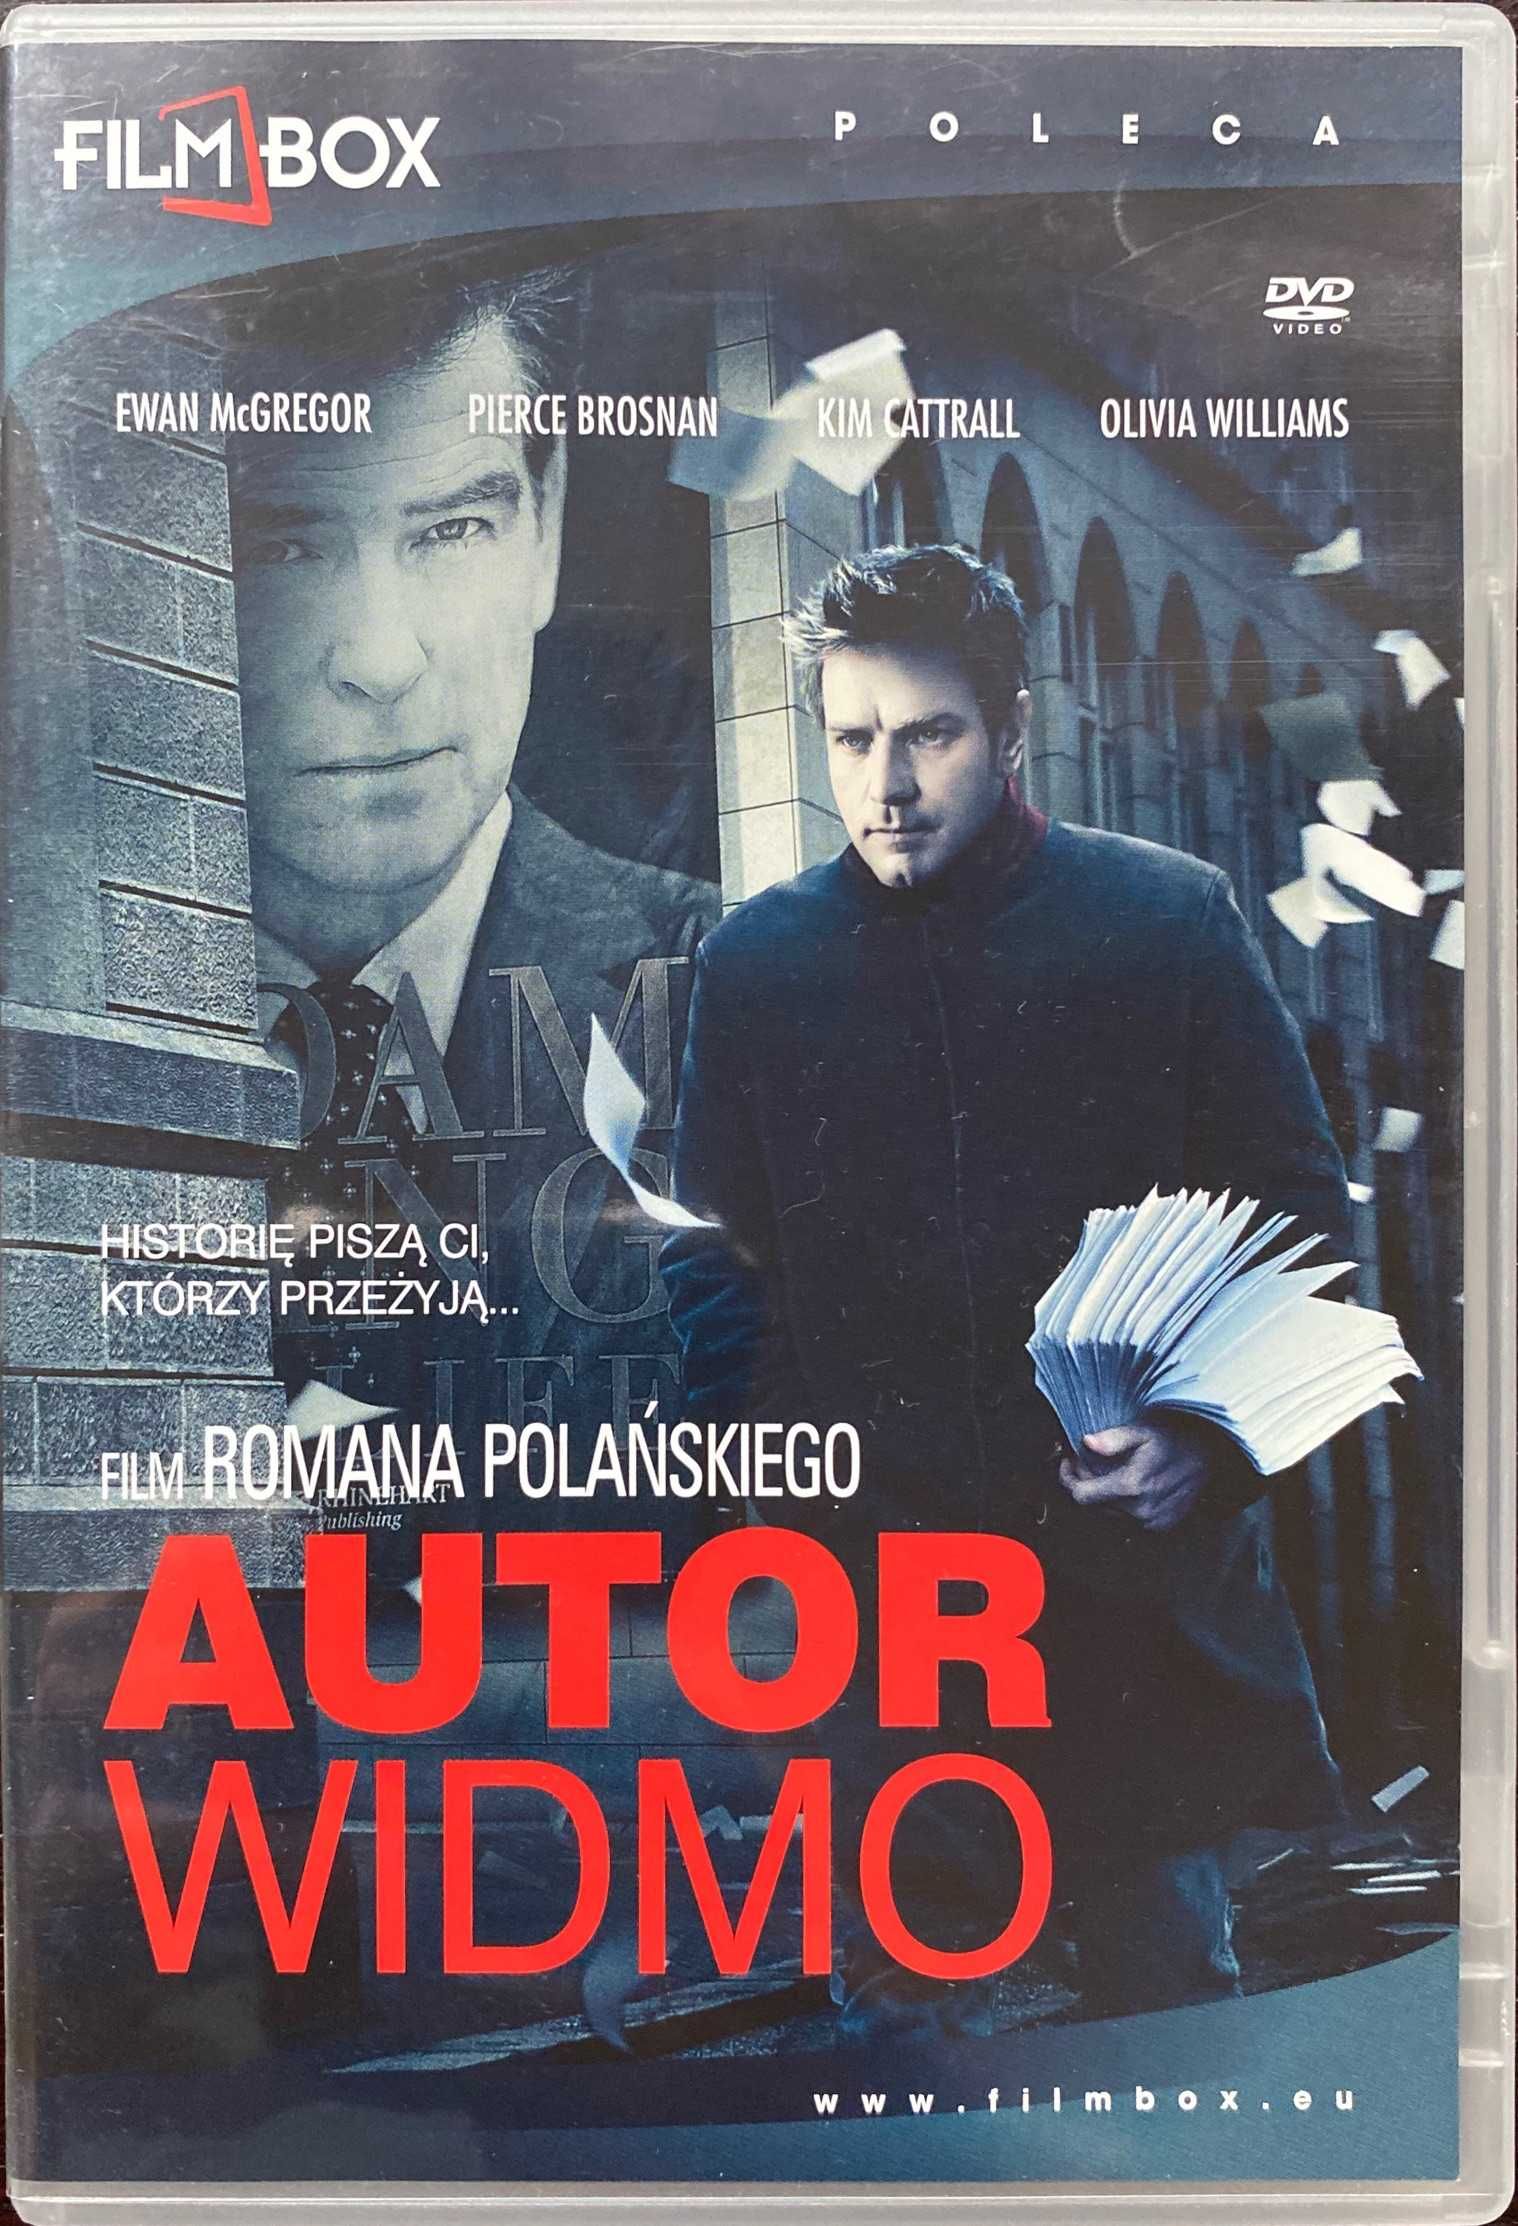 Film DVD Autor Widmo Roman Polański Pierce Brosnan